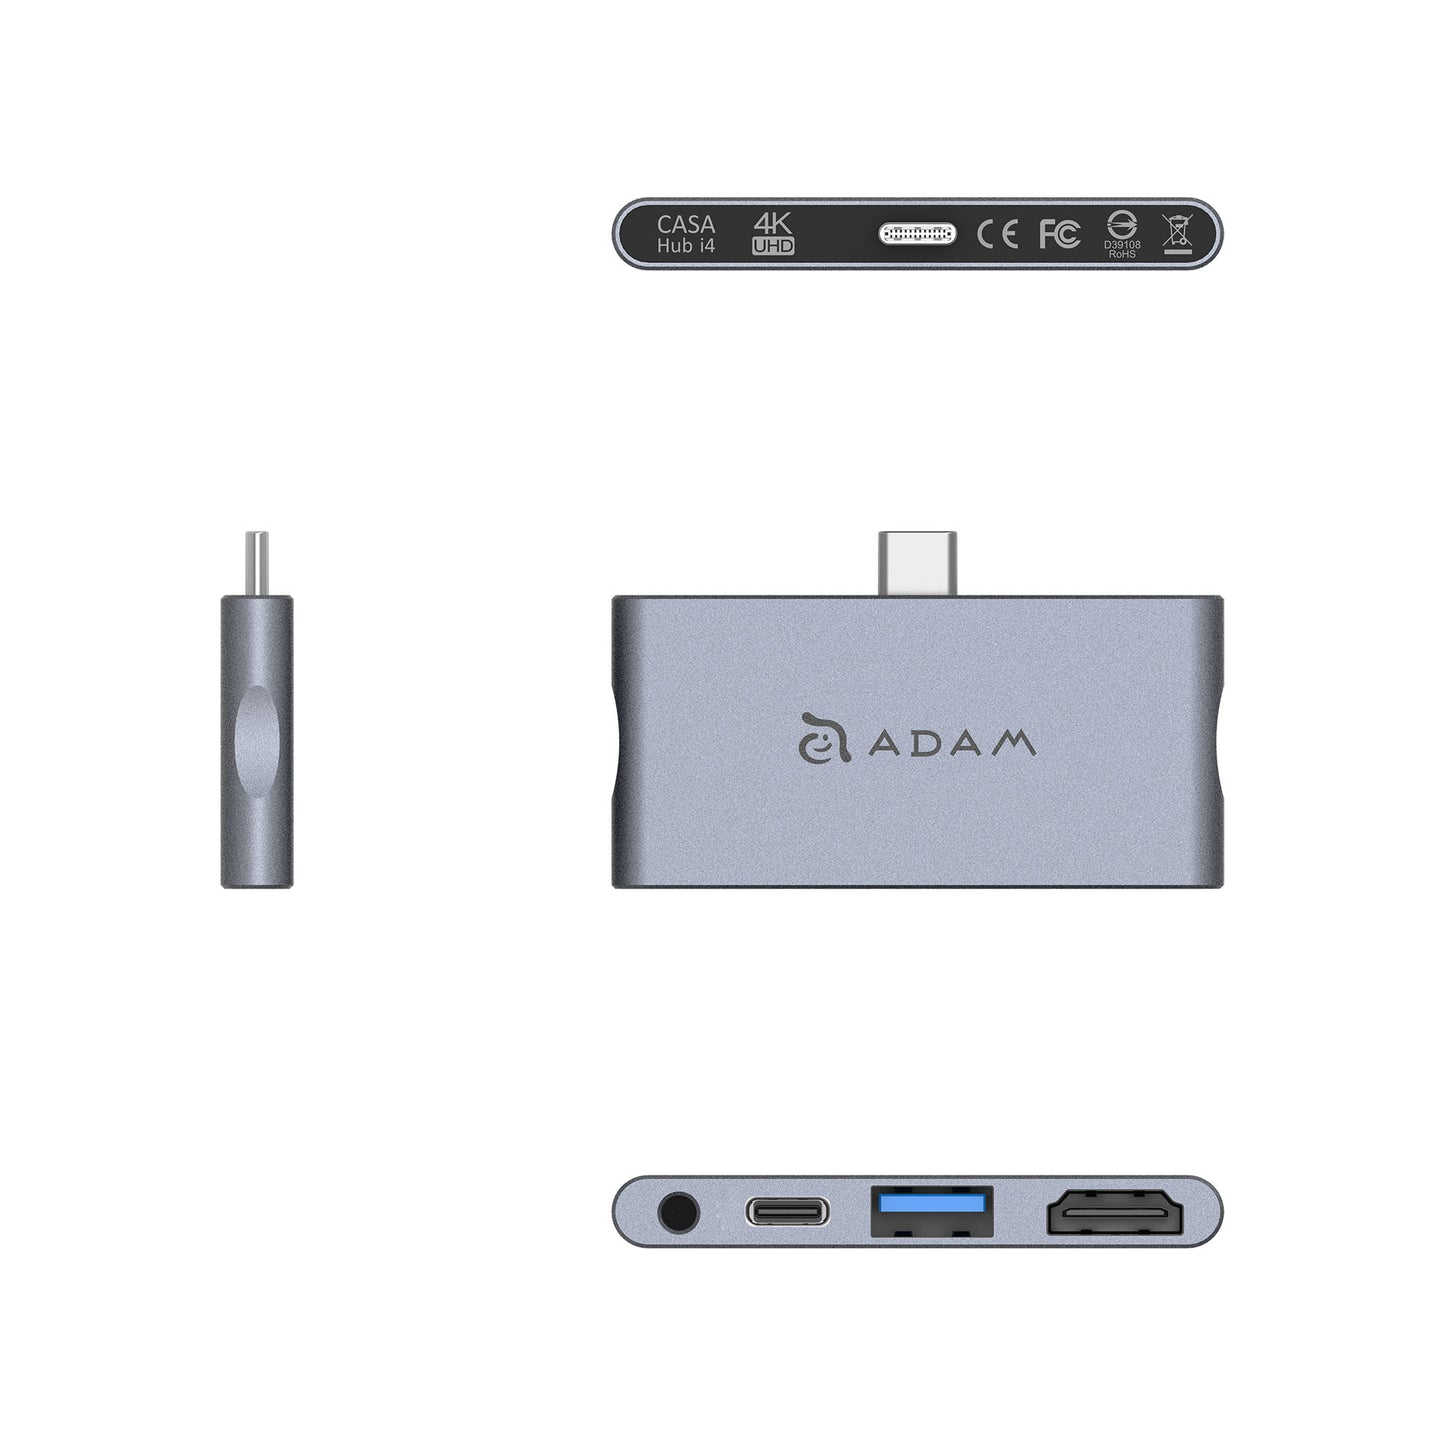 ADAM ELEMENTS Casa Hub i4 USB-C 4-in-1 Hub for iPad  Pro - Grey